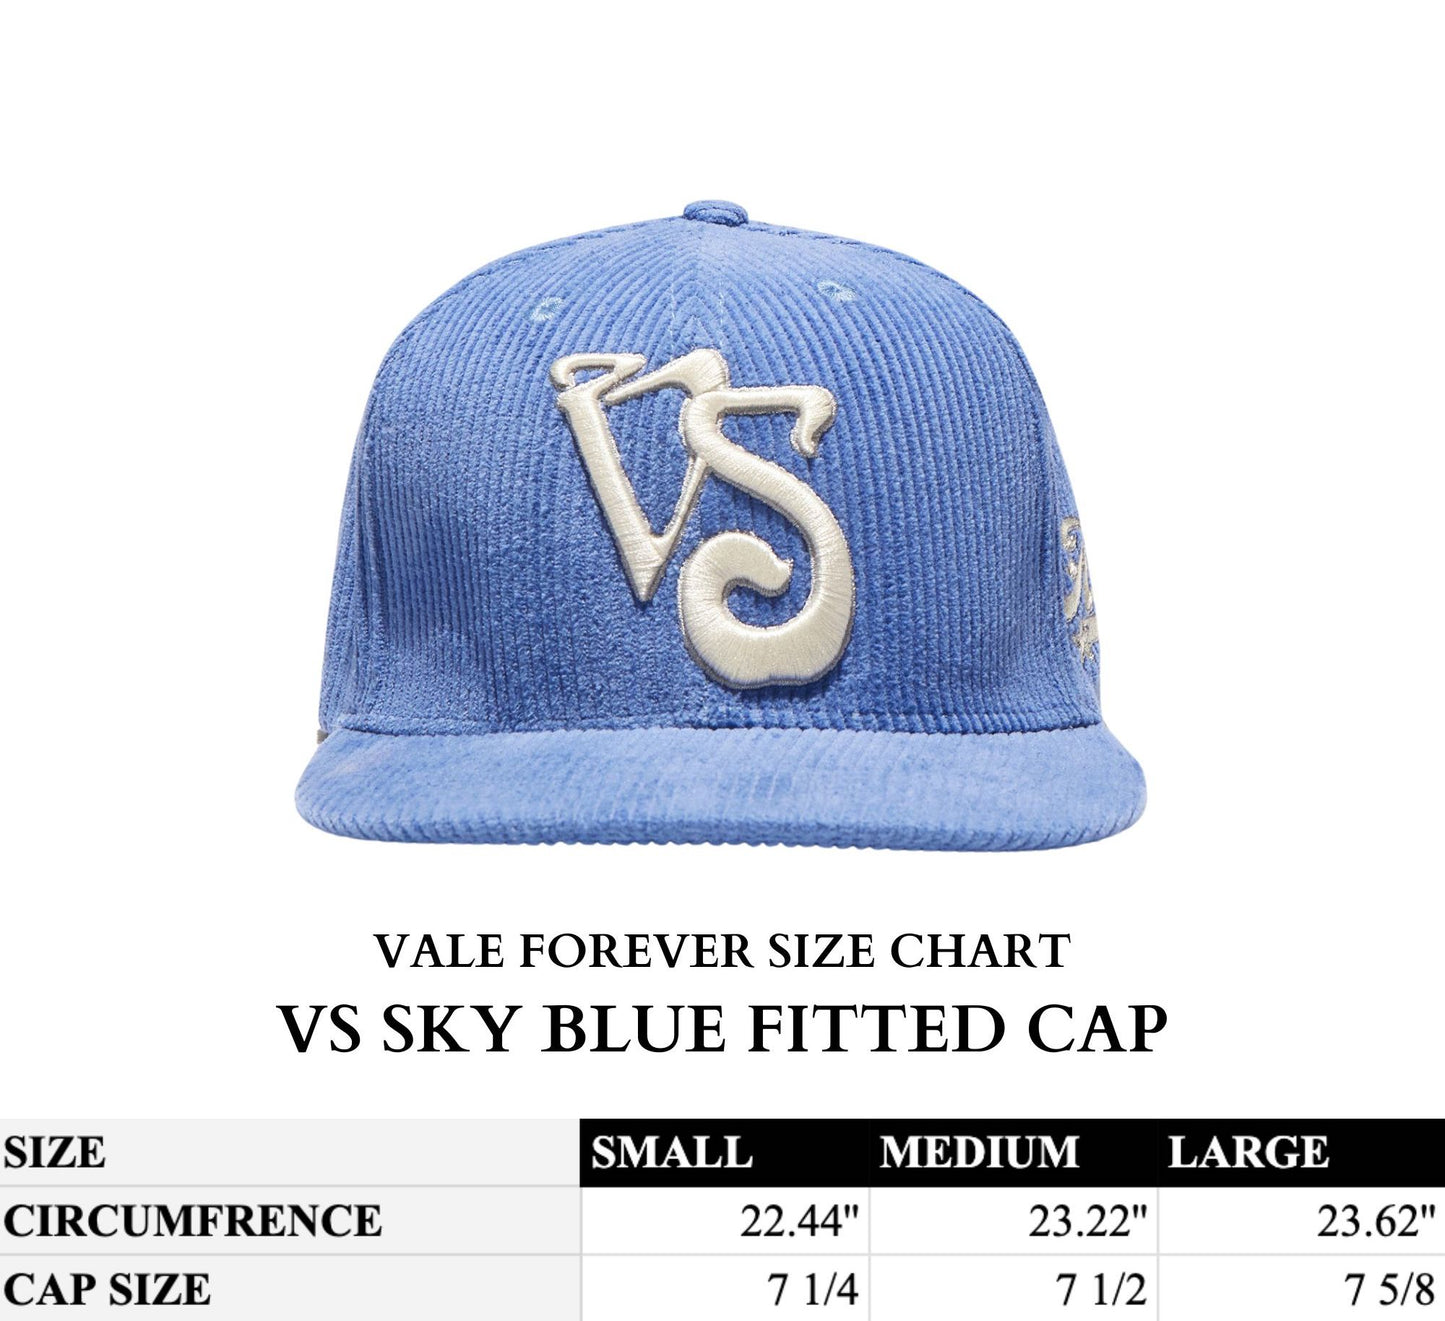 VS SKY BLUE FITTED CAP